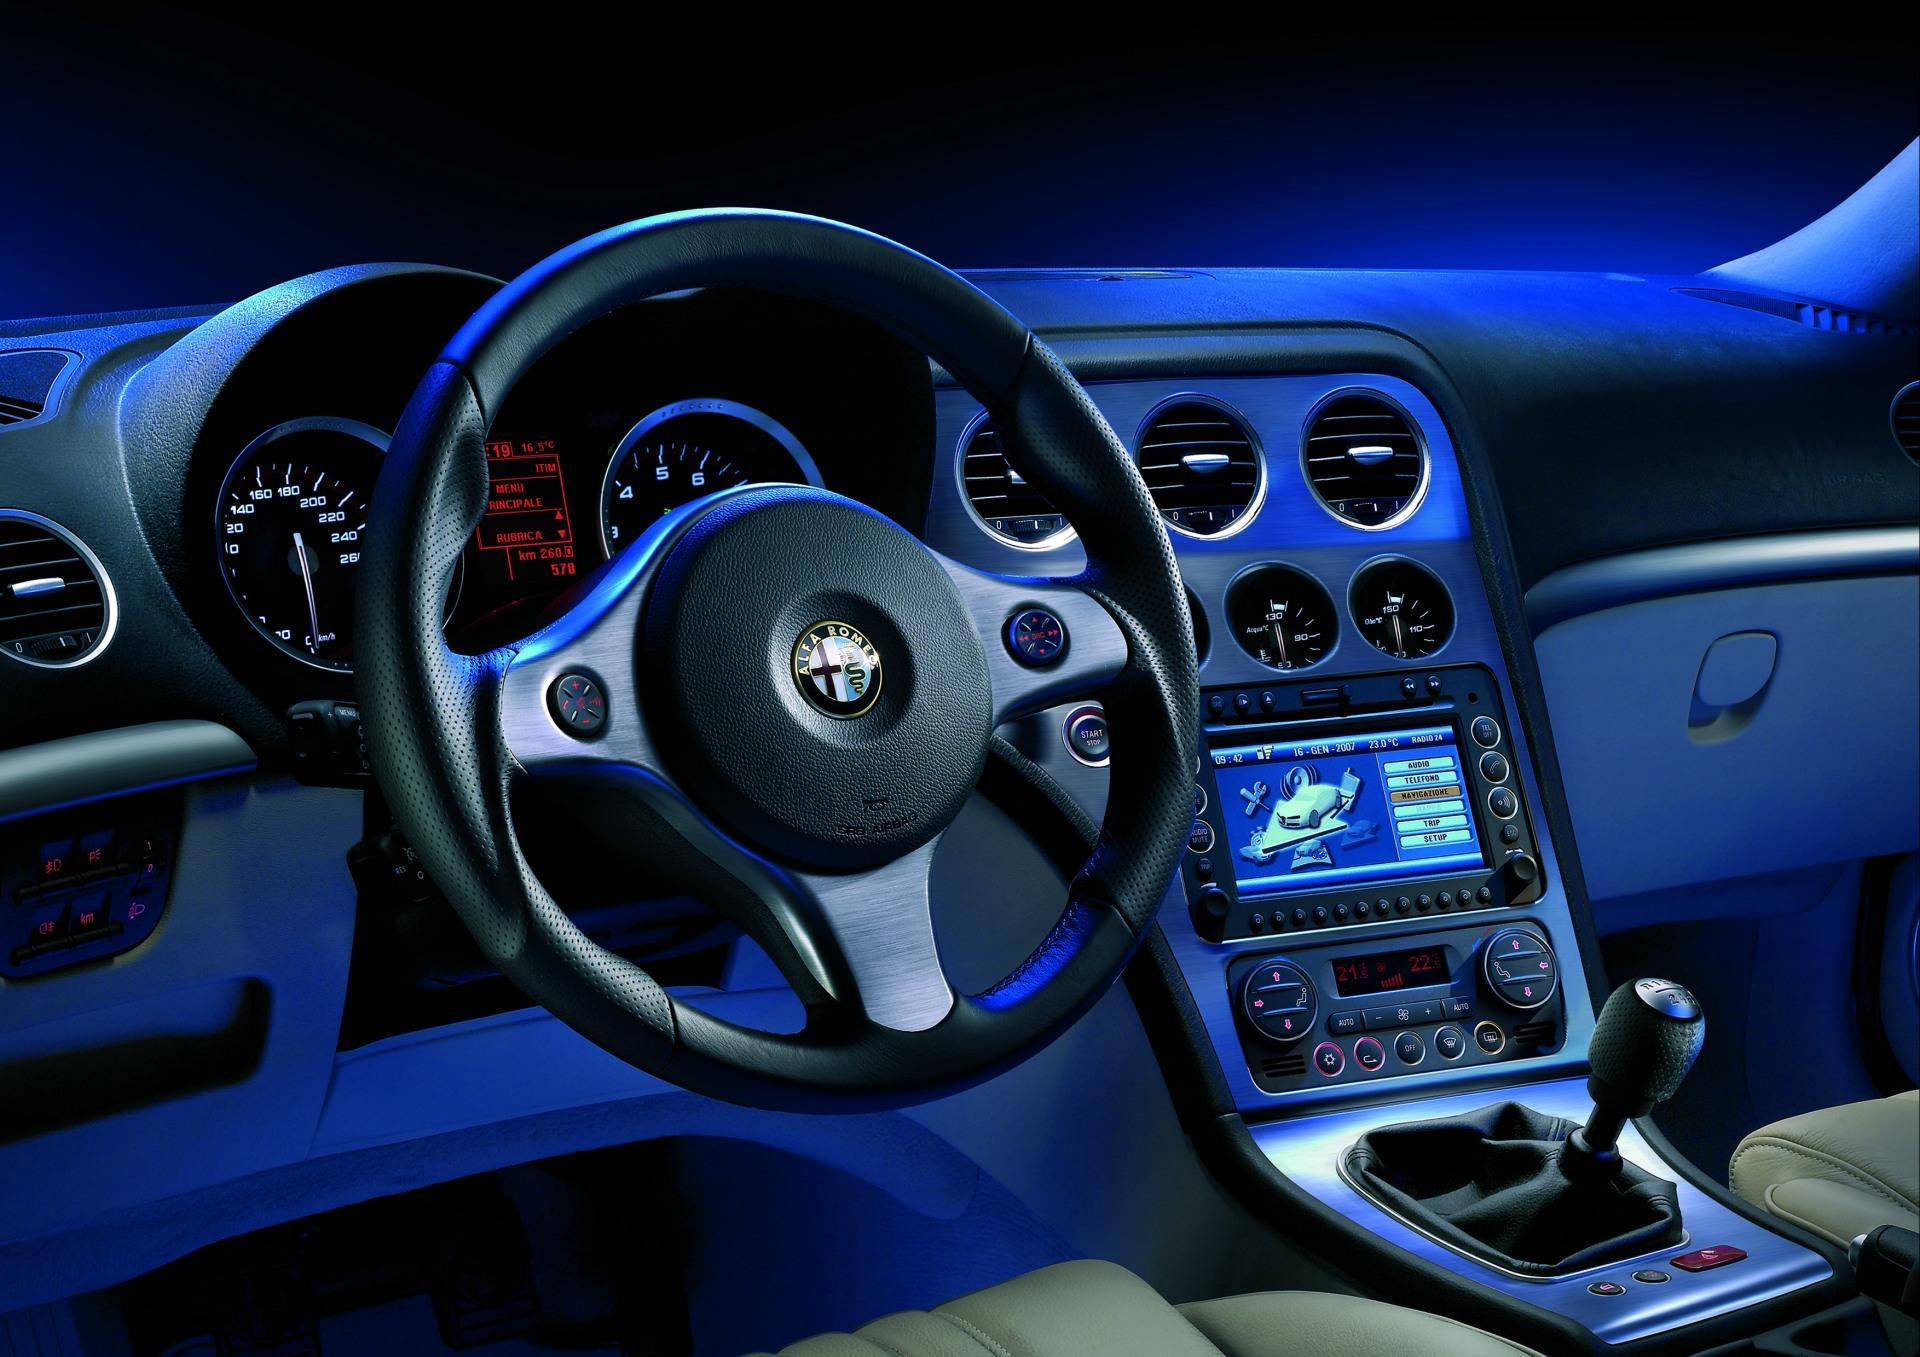 Alfa Romeo 159 Desktop Wallpaper and High Resolution Image